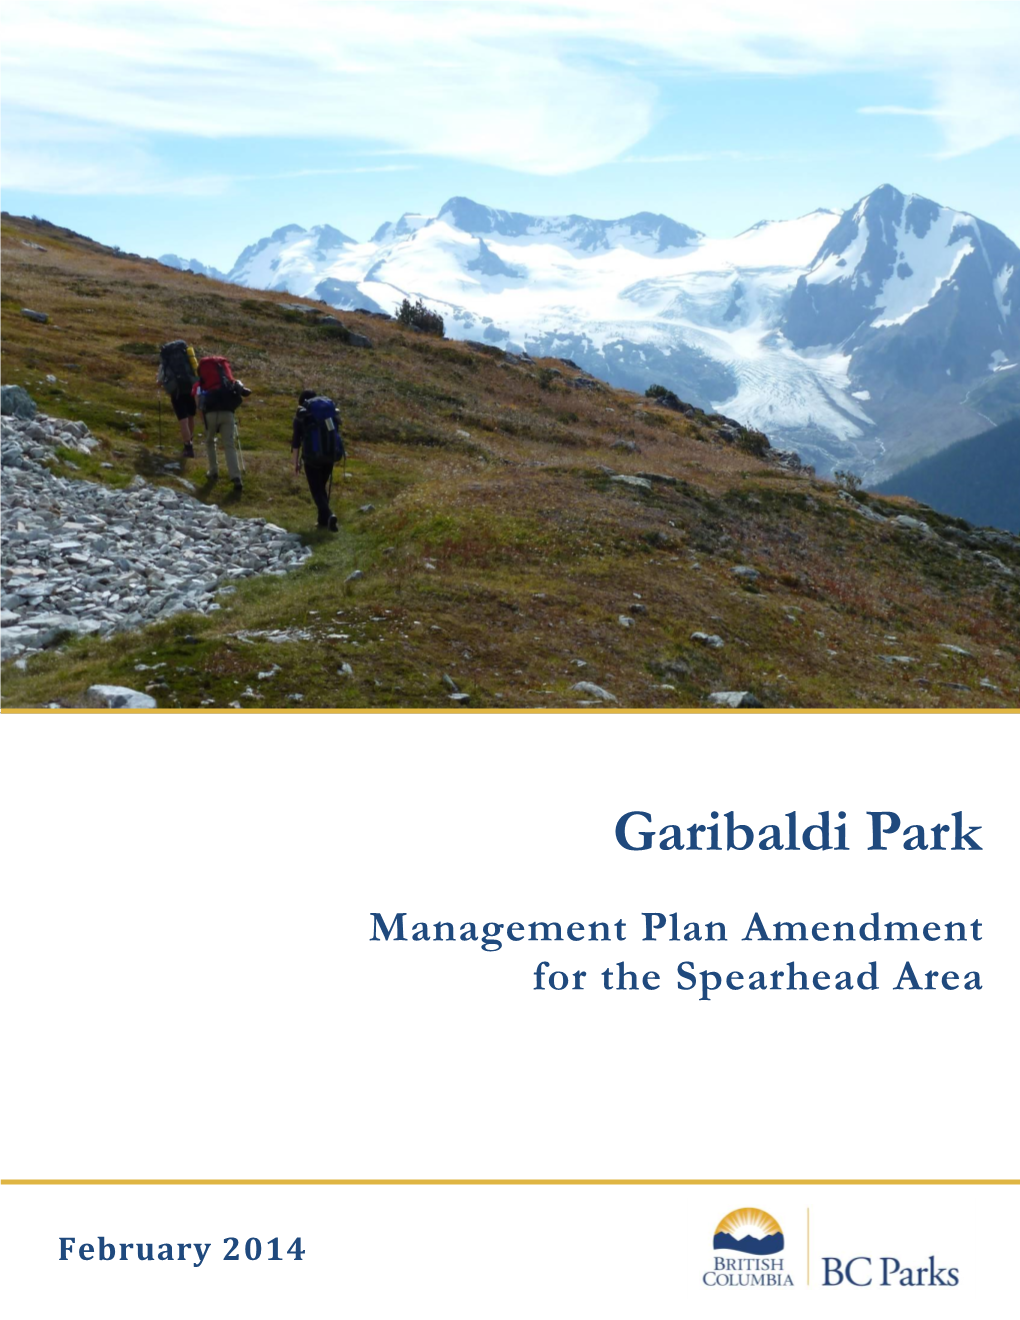 Management Plan Amendment for the Spearhead Area of Garibaldi